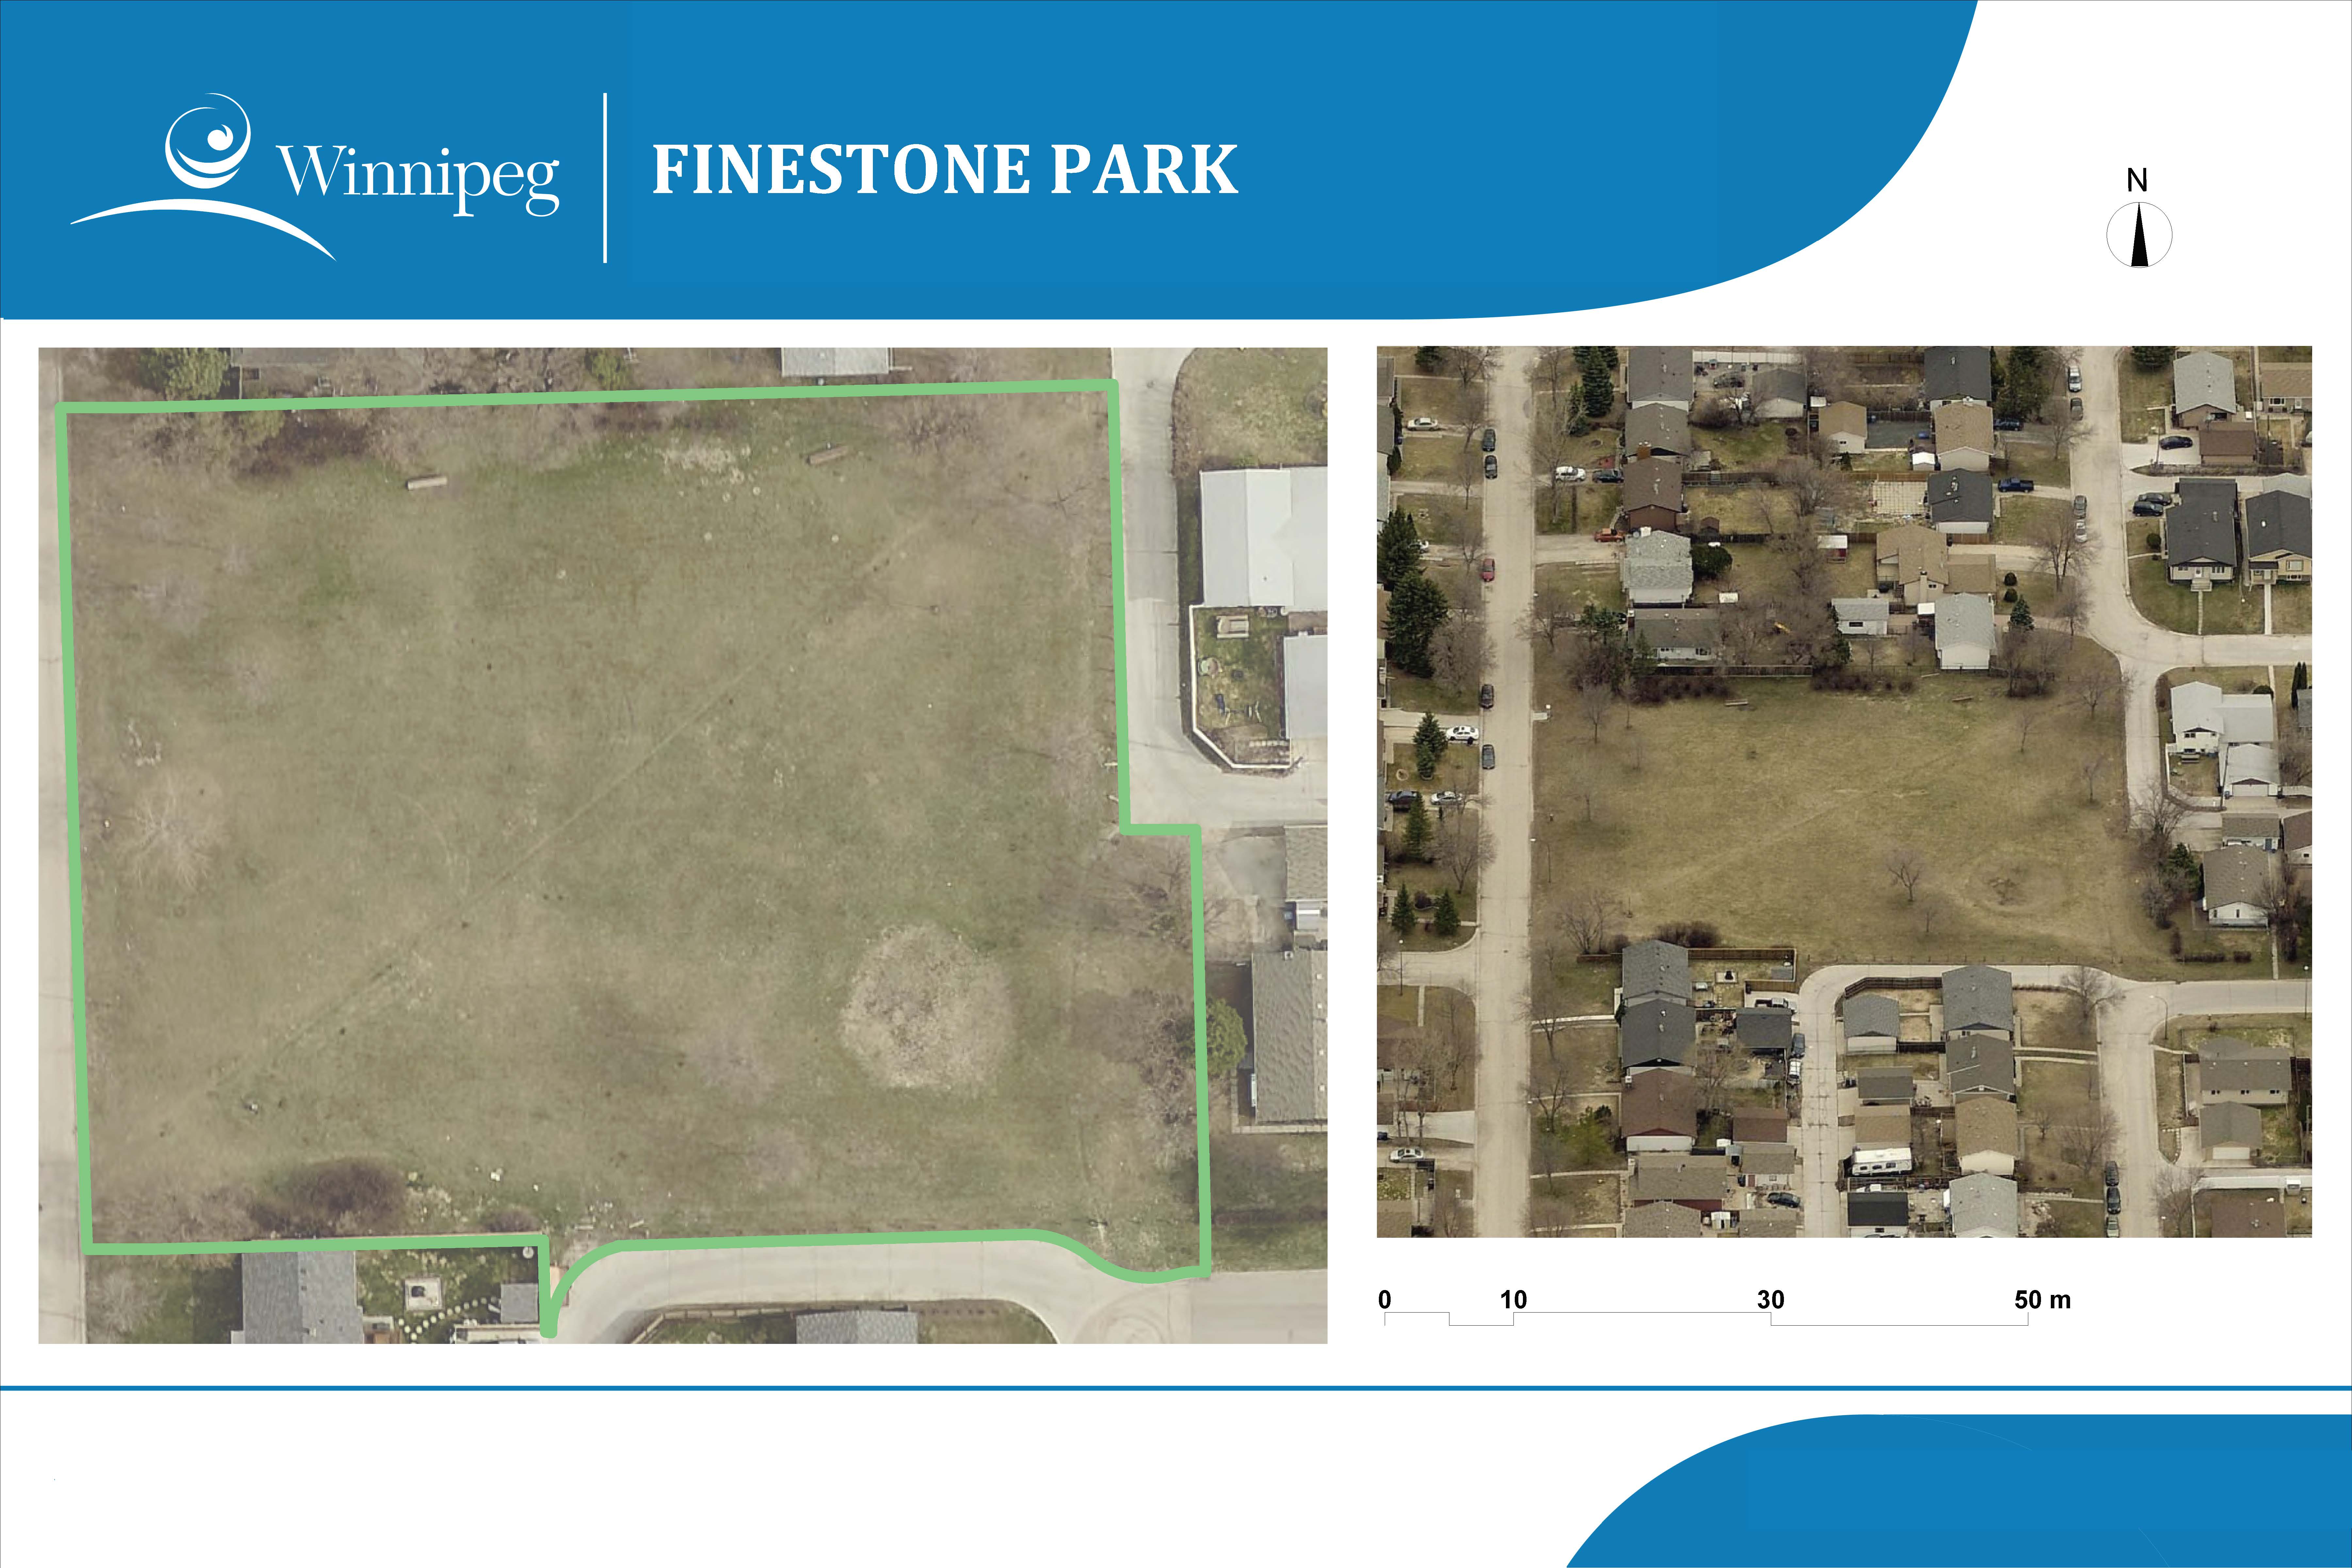 Finestone Park Map